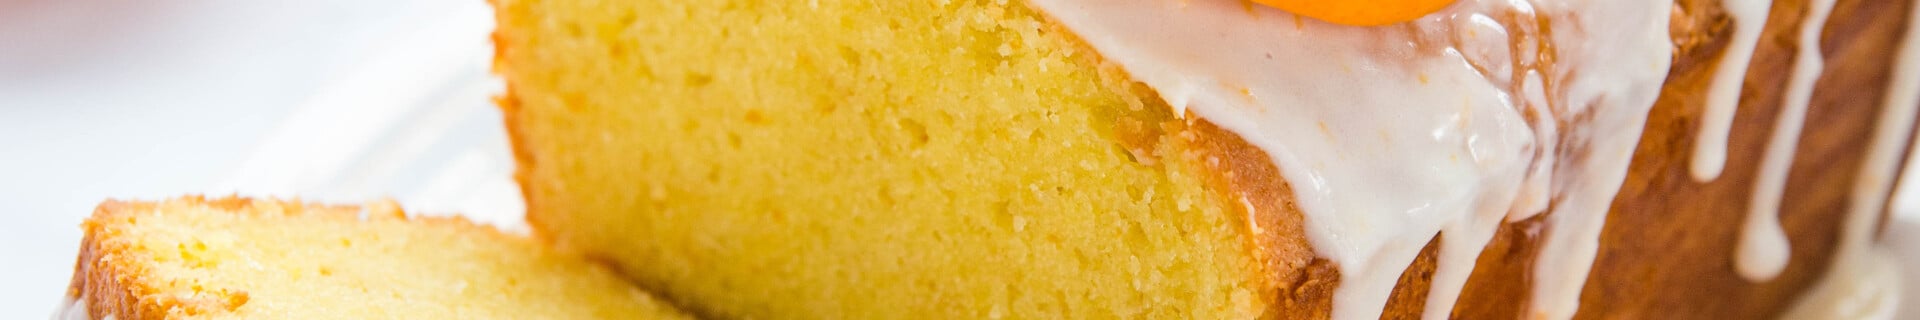 loaf of orange sour cream pound cake with citrus glaze